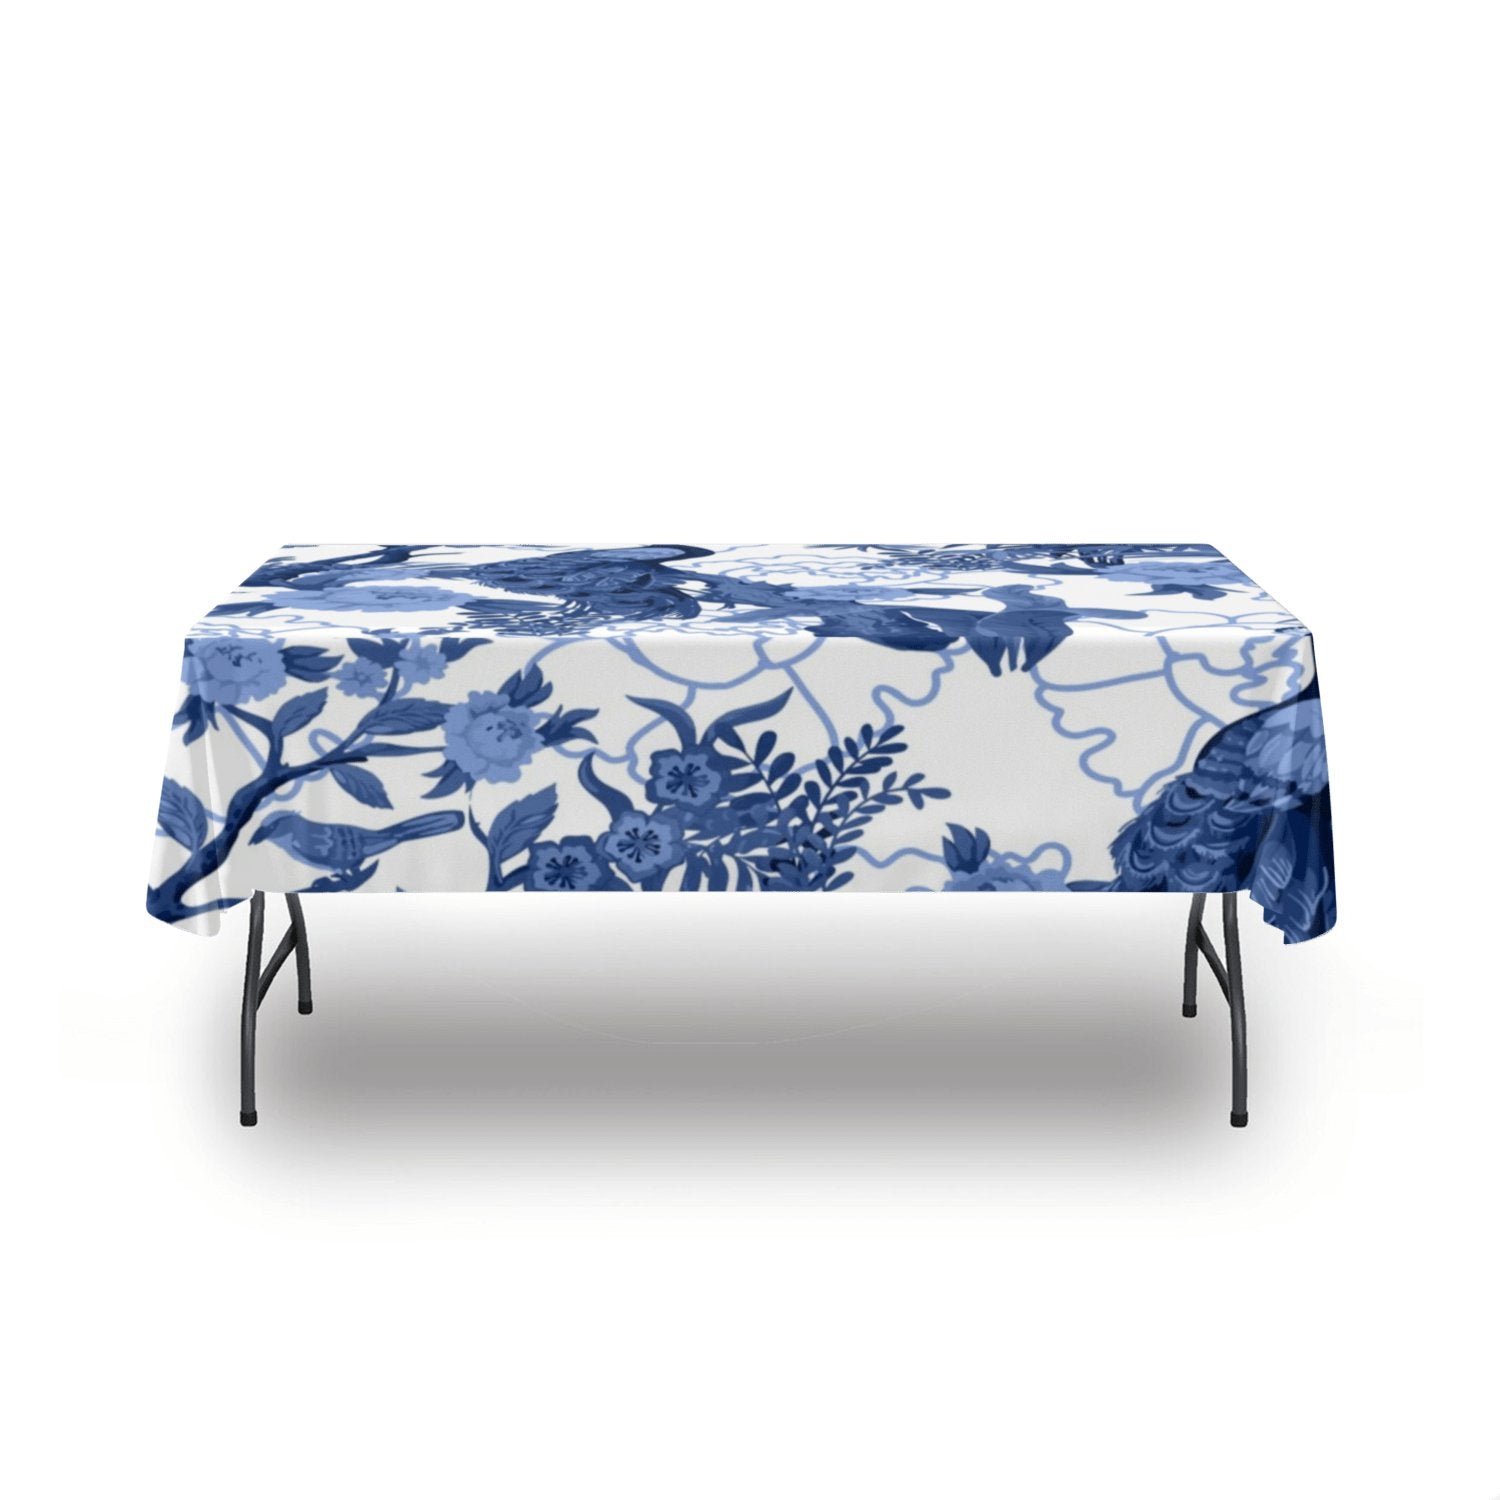 Kate McEnroe New York Chinoiserie Blue Peacock Tablecloth, Elegant Floral Bird Design, Classic Table LinenTablecloths100224